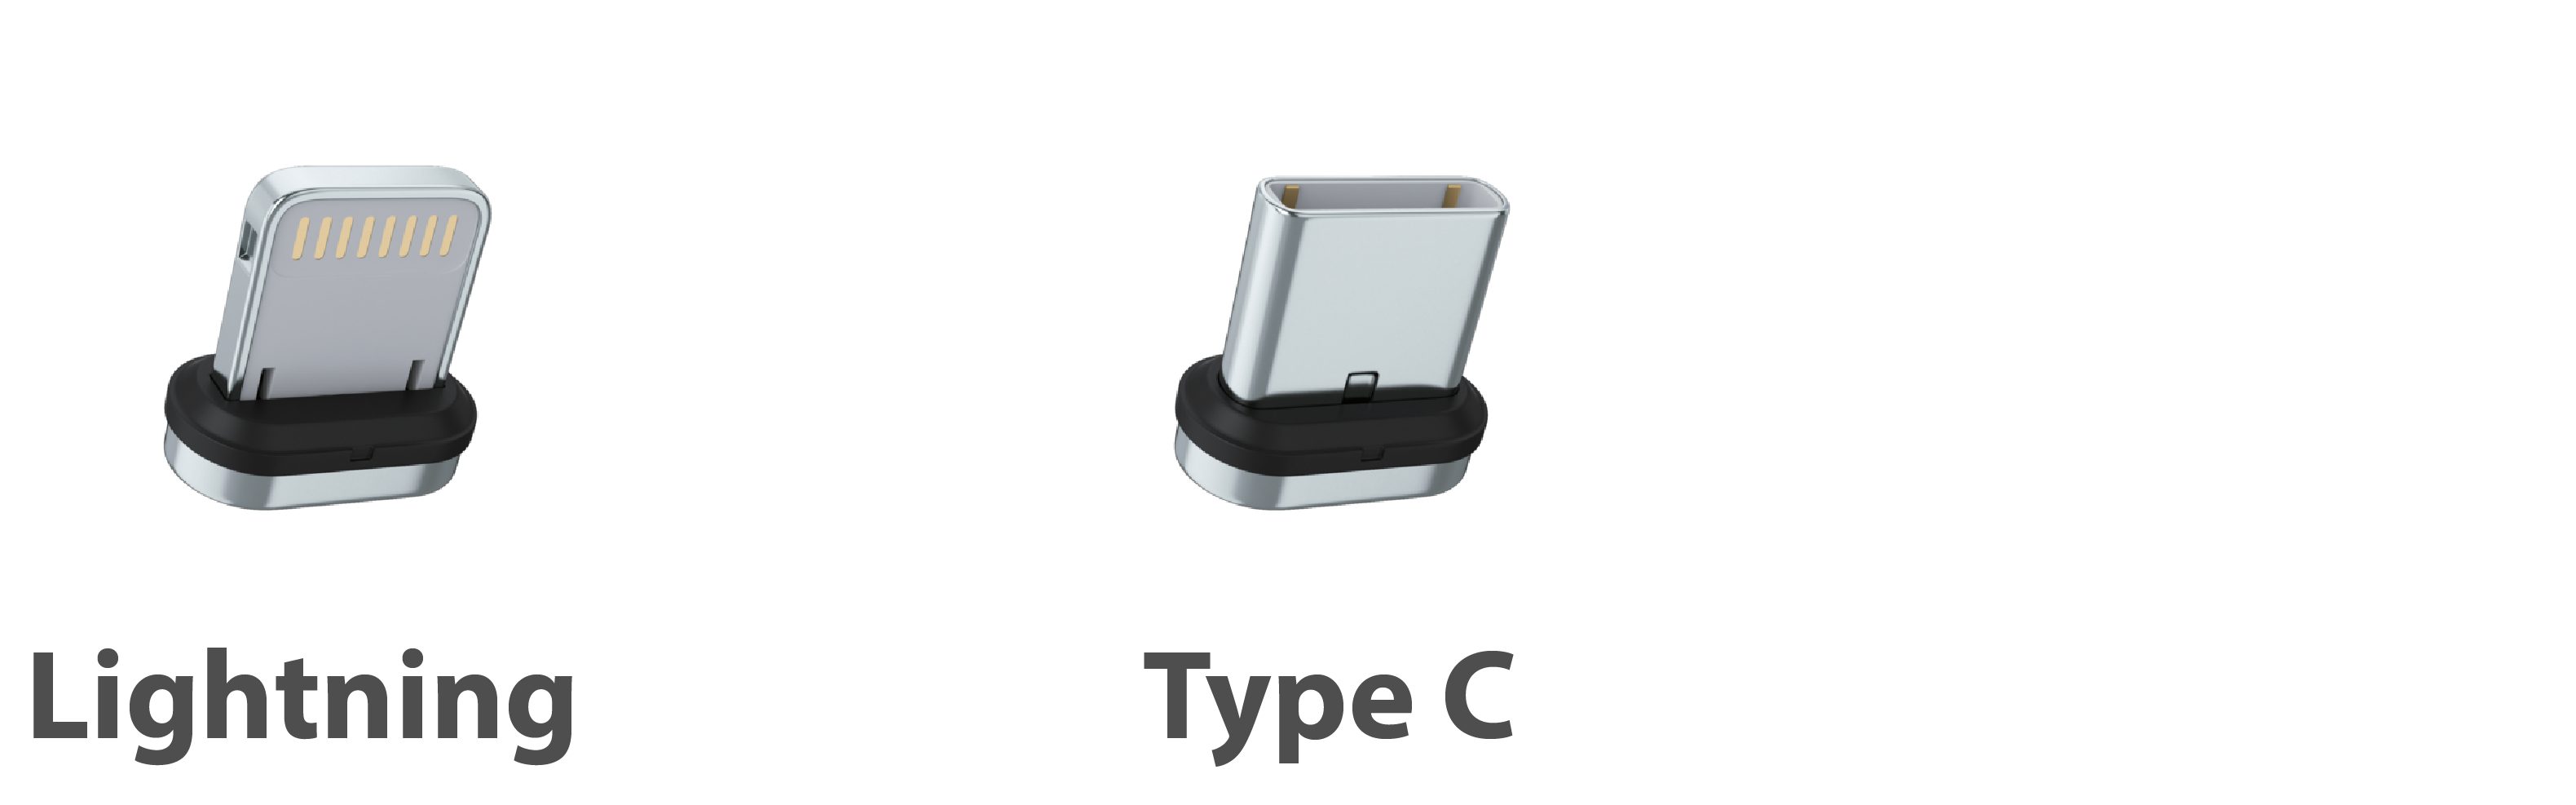 KEUTEK - Micro USB • Lightning • Type C